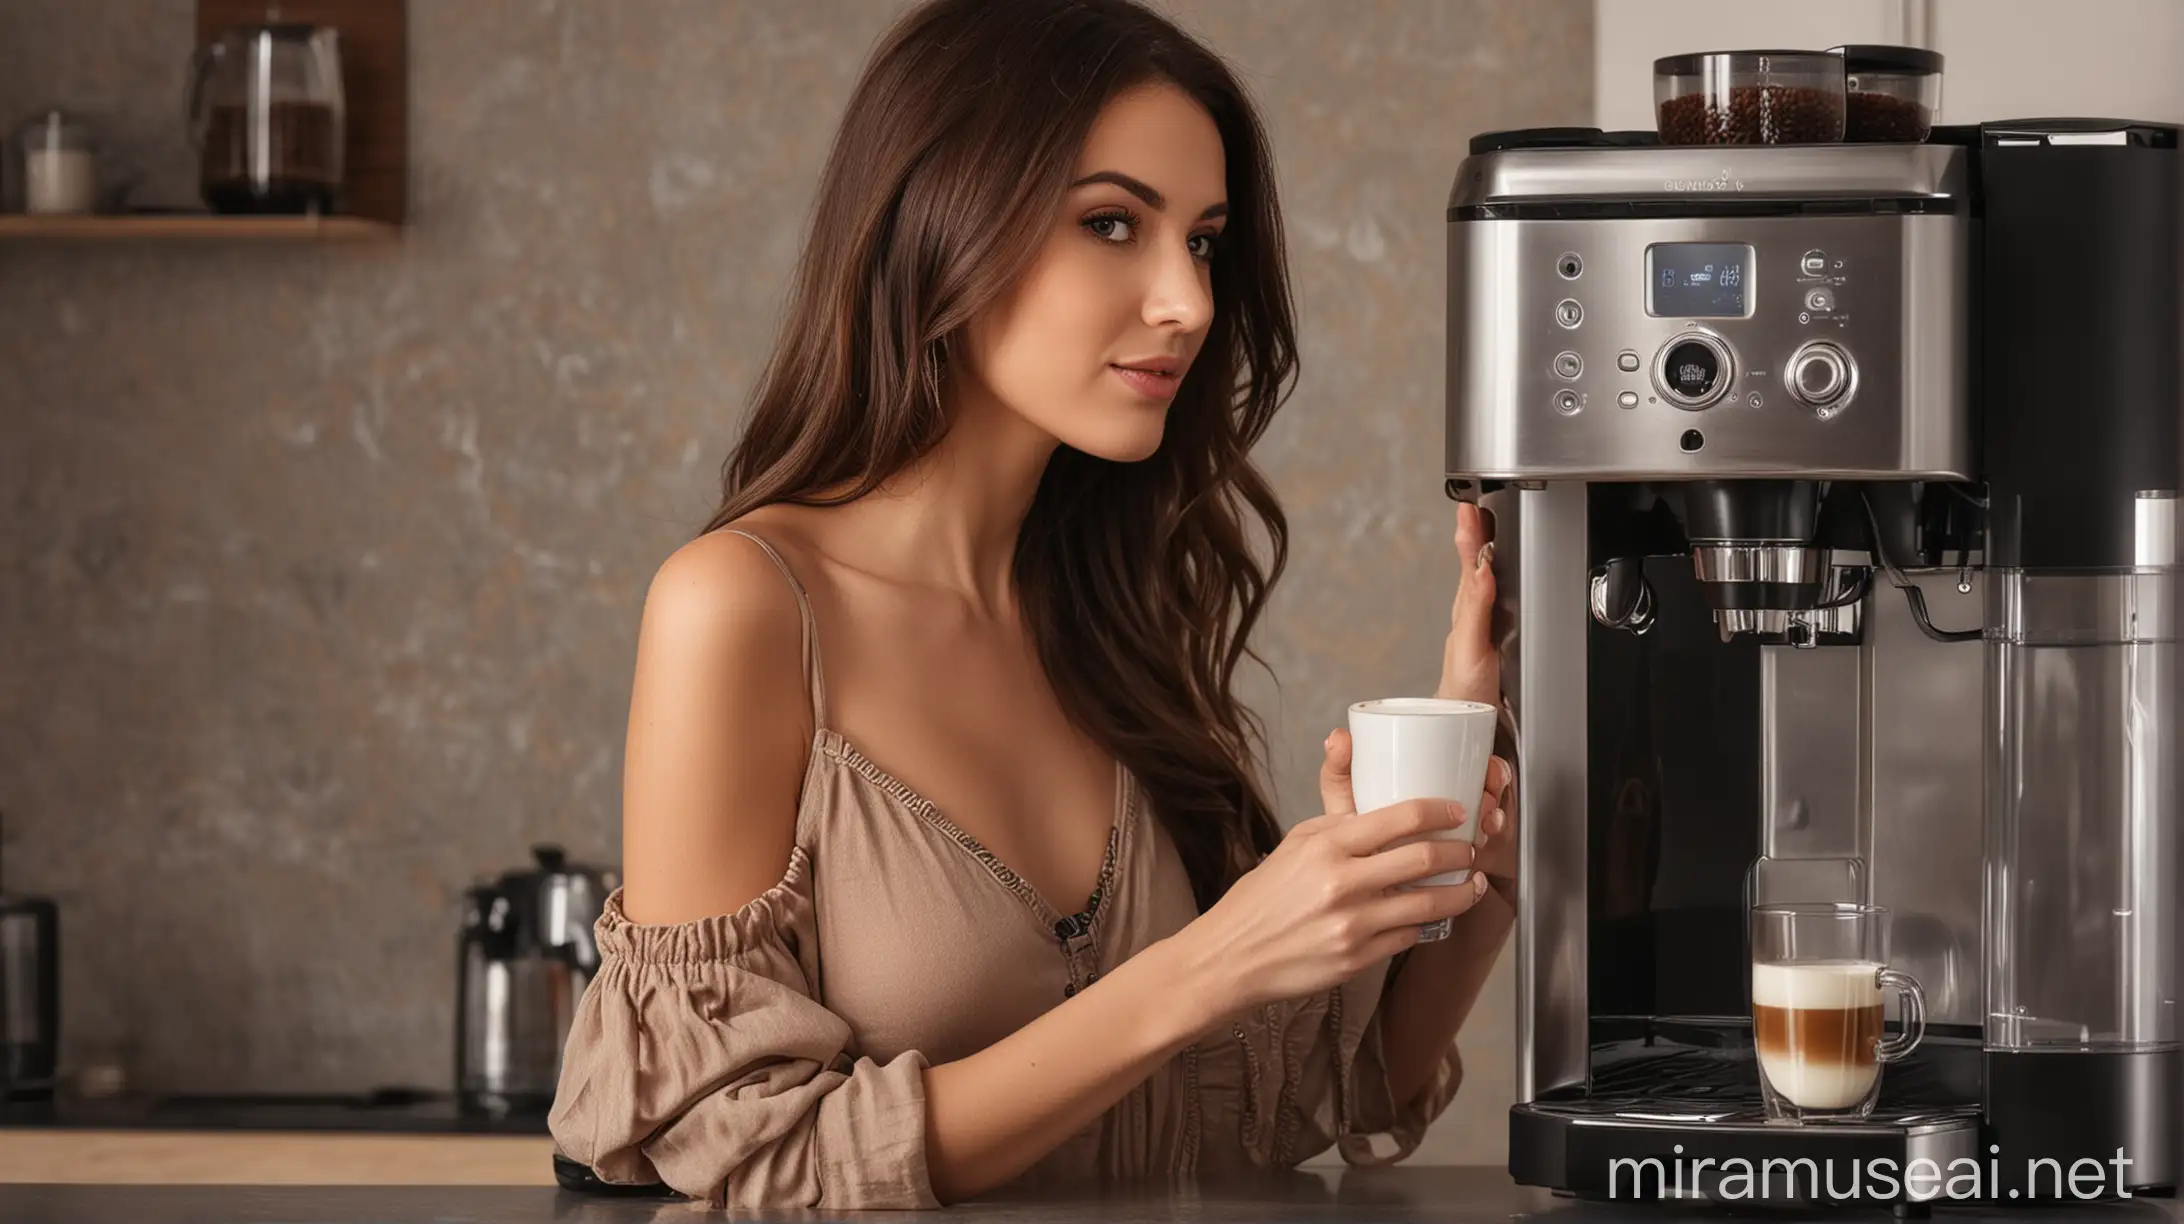 Beautiful Woman with Coffee Machine